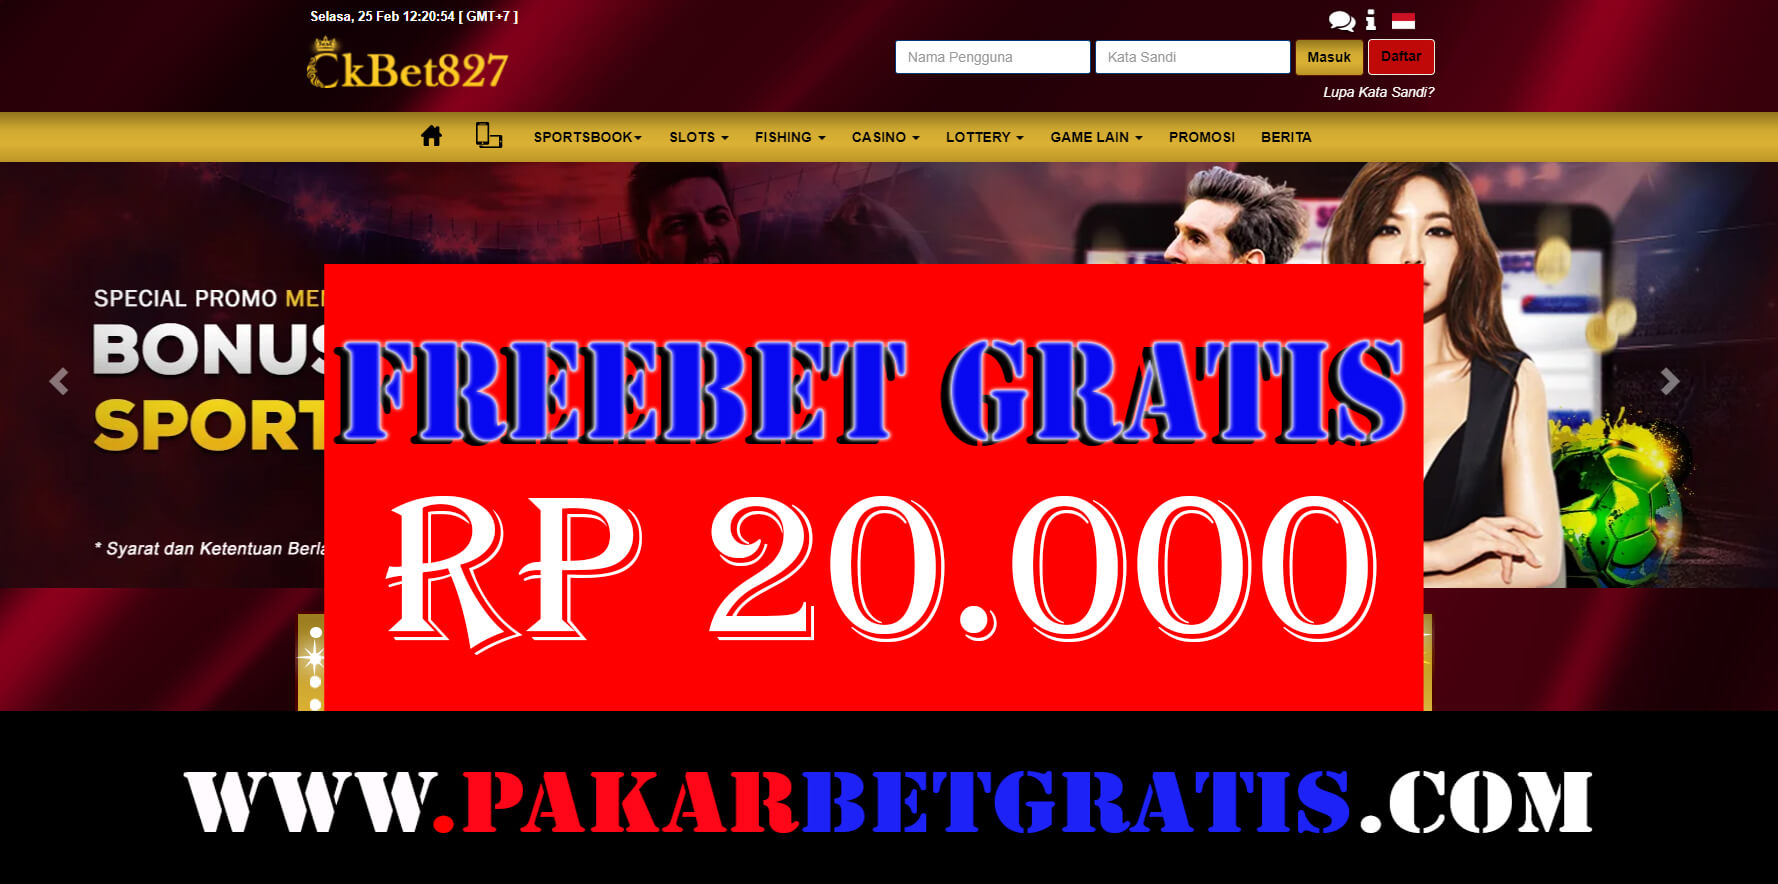 Freebet Gratis CKBET827 Rp 20.000